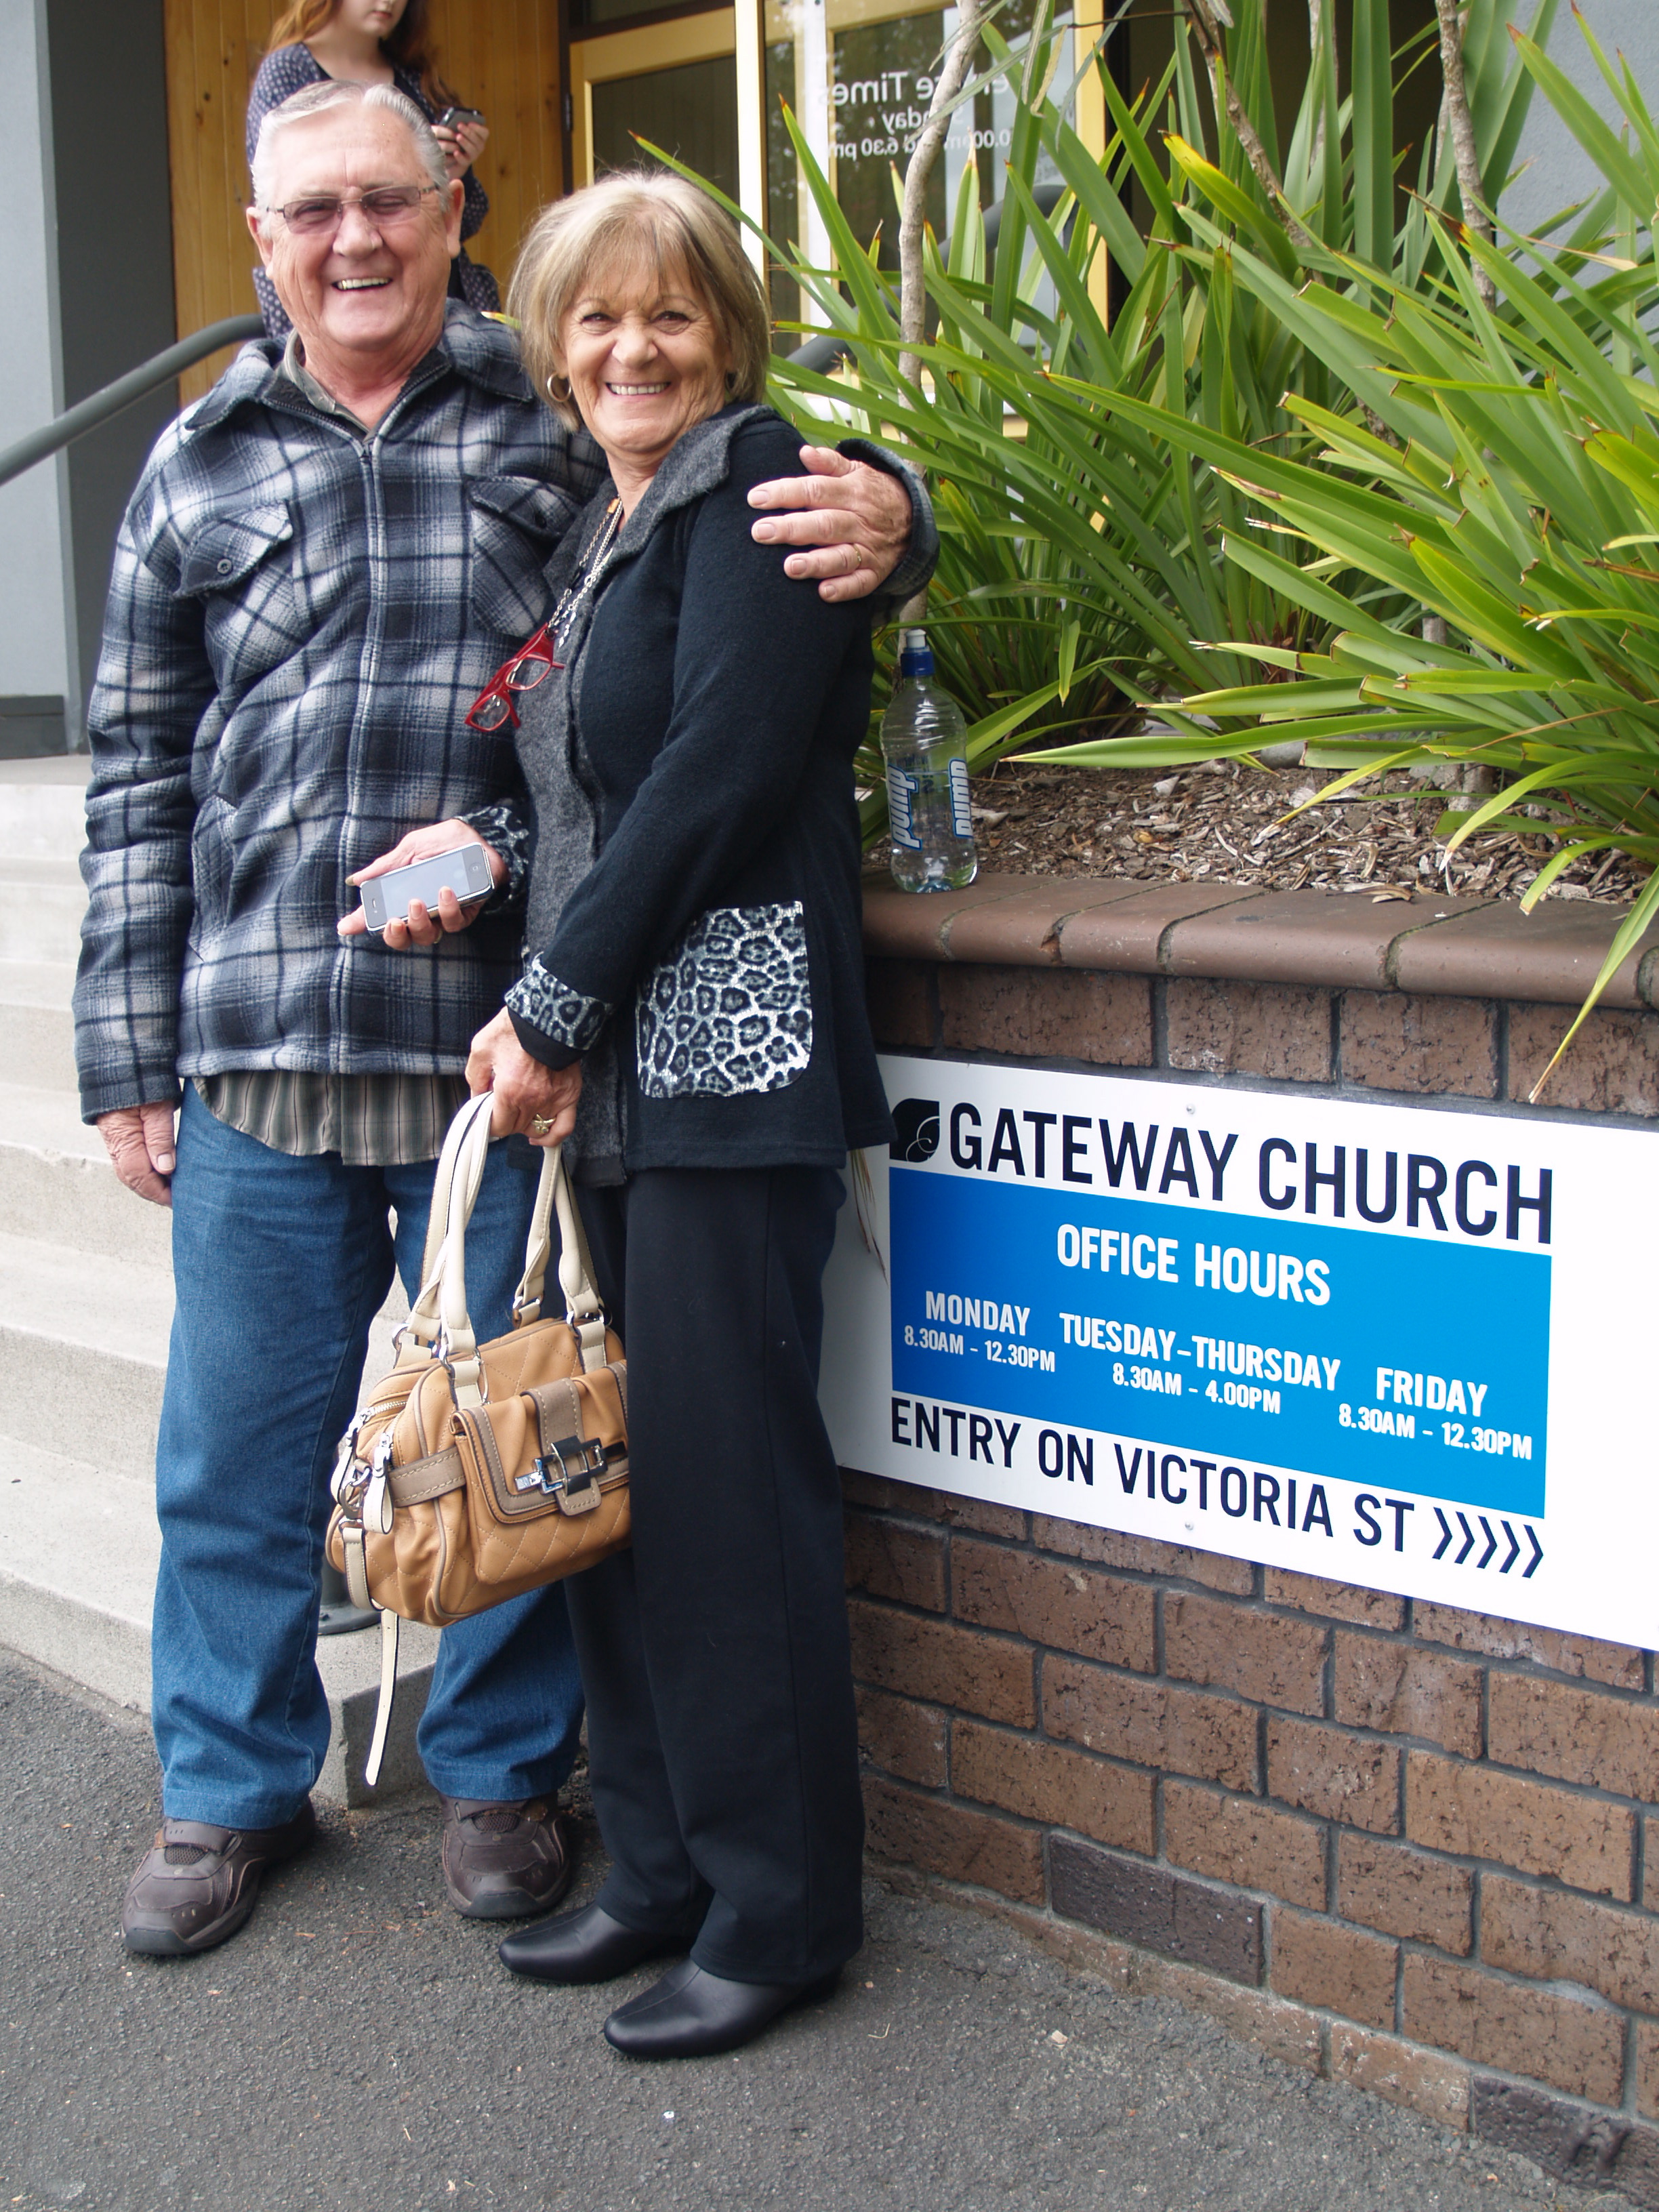 Mum Nena and husband Charles at Gateway Church - Hamilton, New Zealand (April 2015). Credit: William Van Zyl